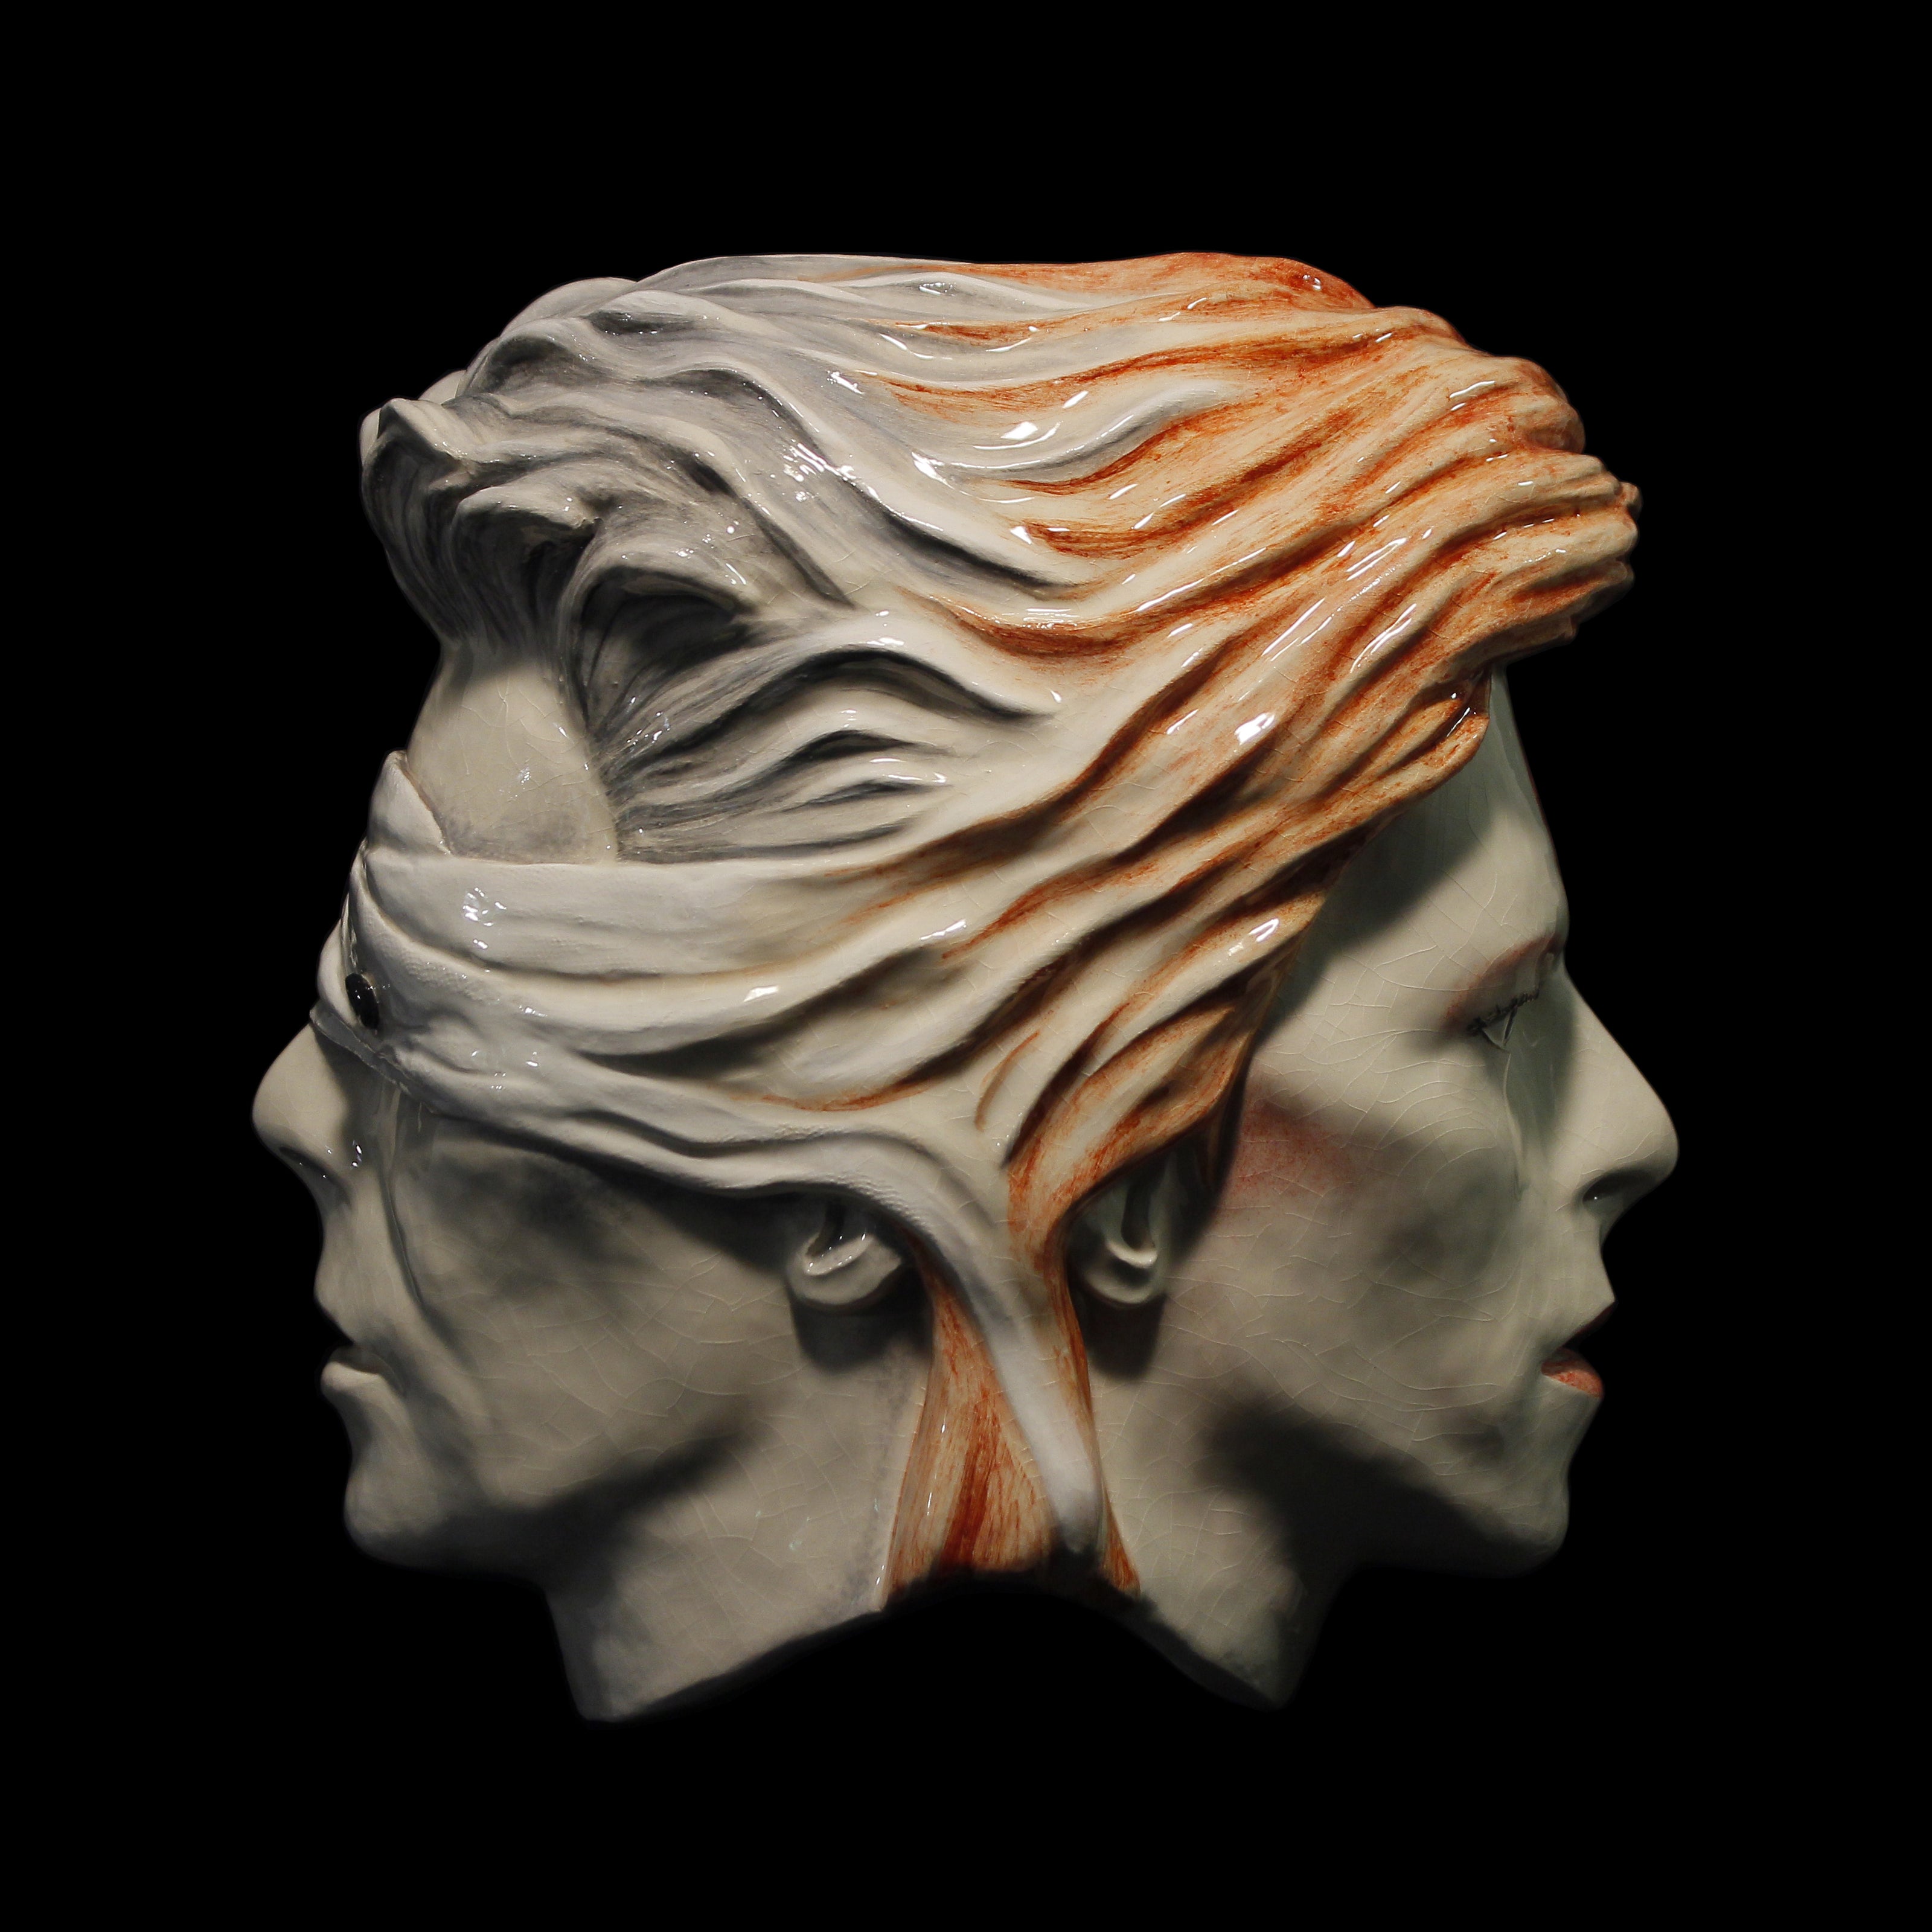 Double Head Ceramic painted sculpture of David Bowie Ziggy-Lazarus by Maria Primolan Sculptor